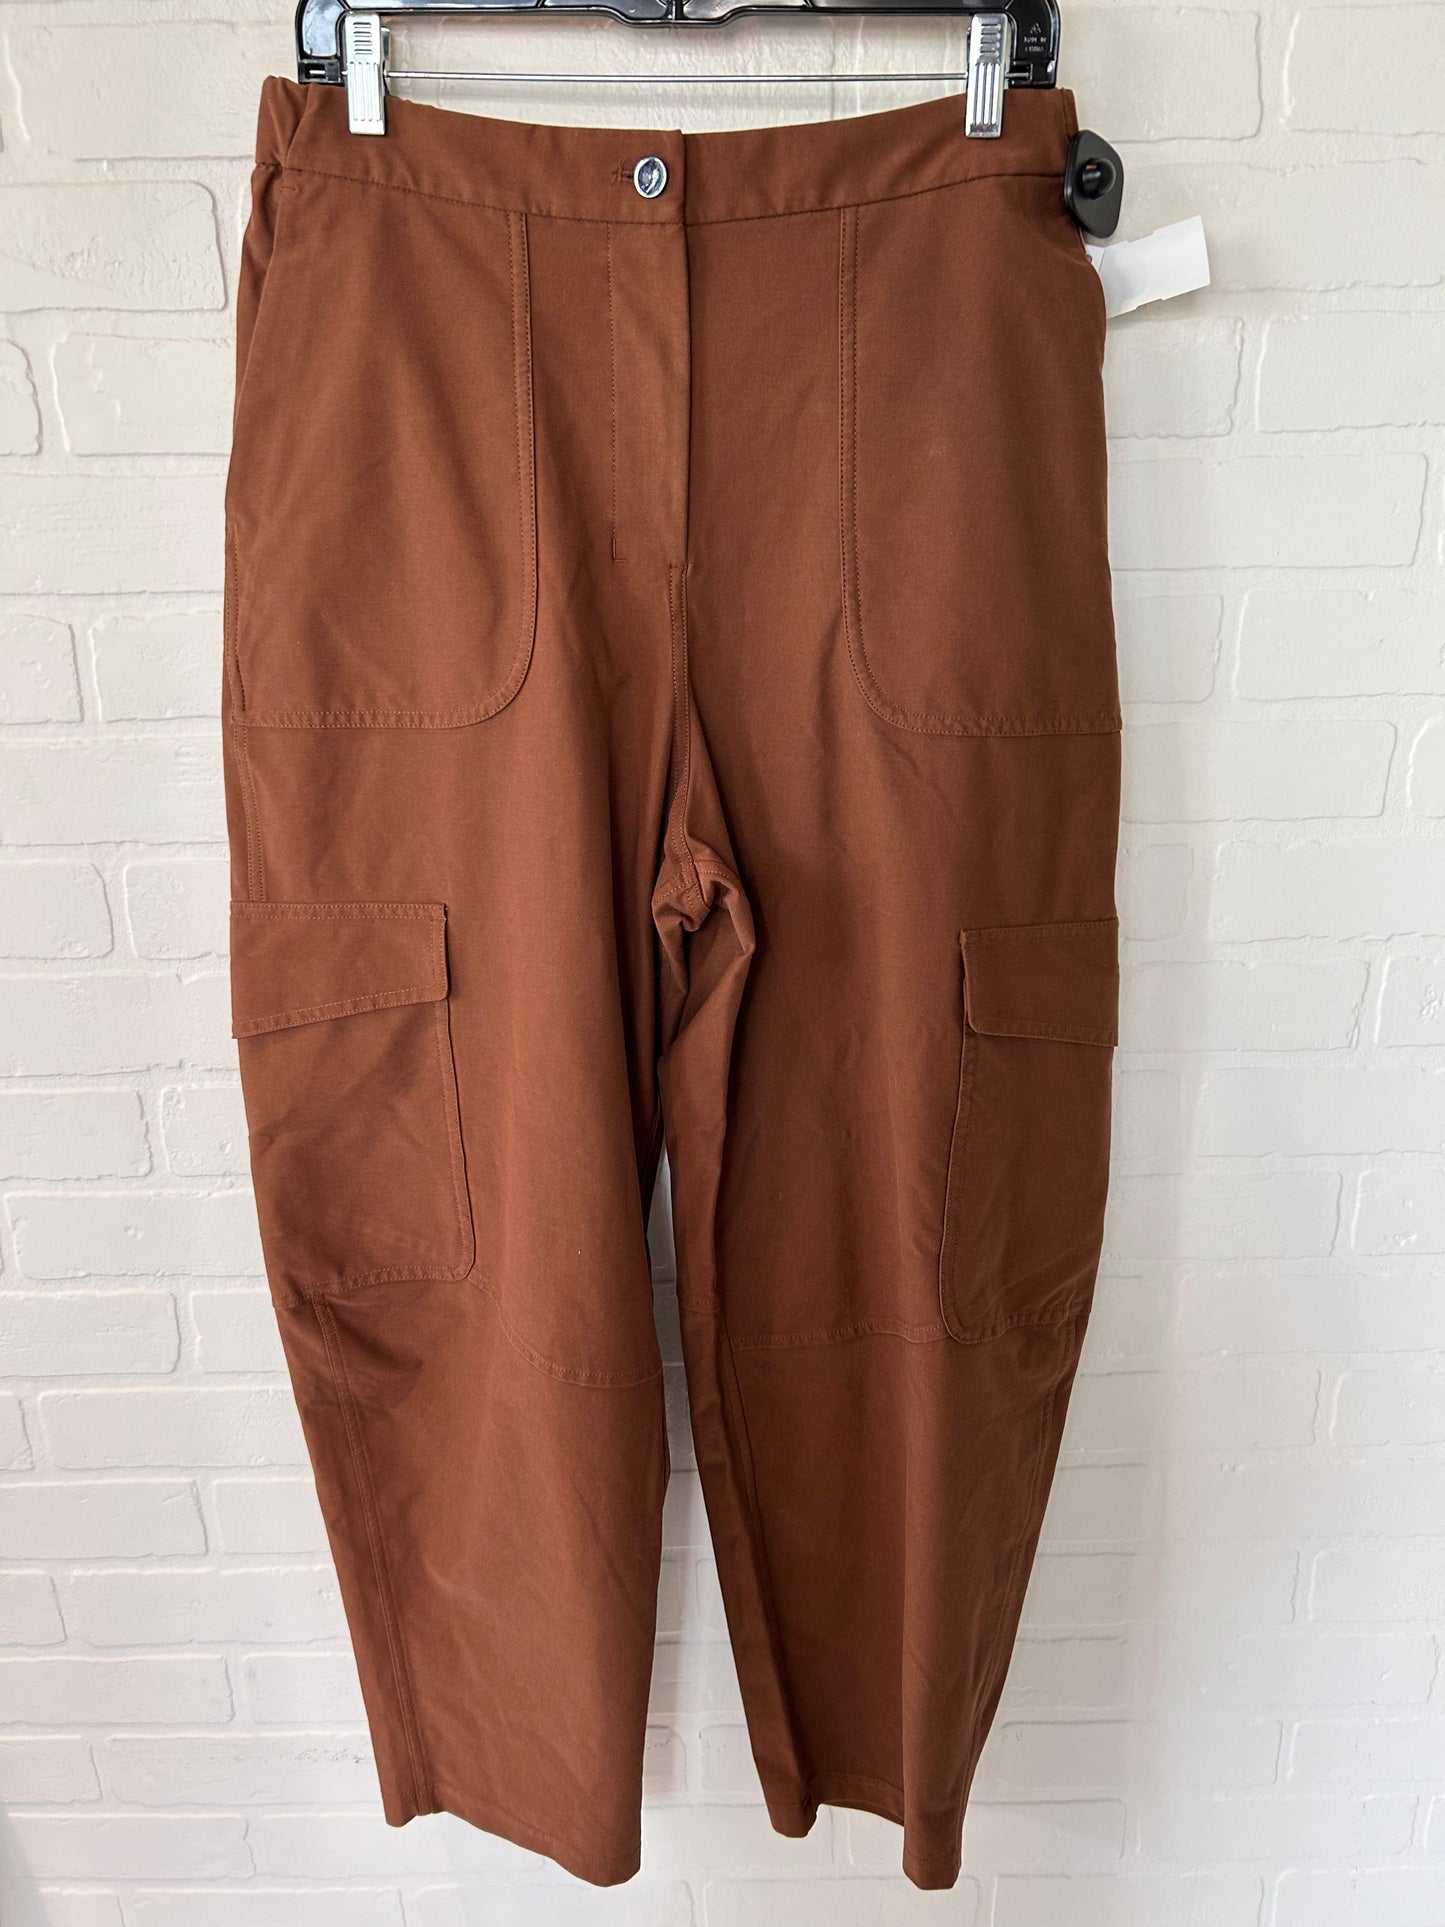 Brown Athletic Pants Lululemon, Size 12